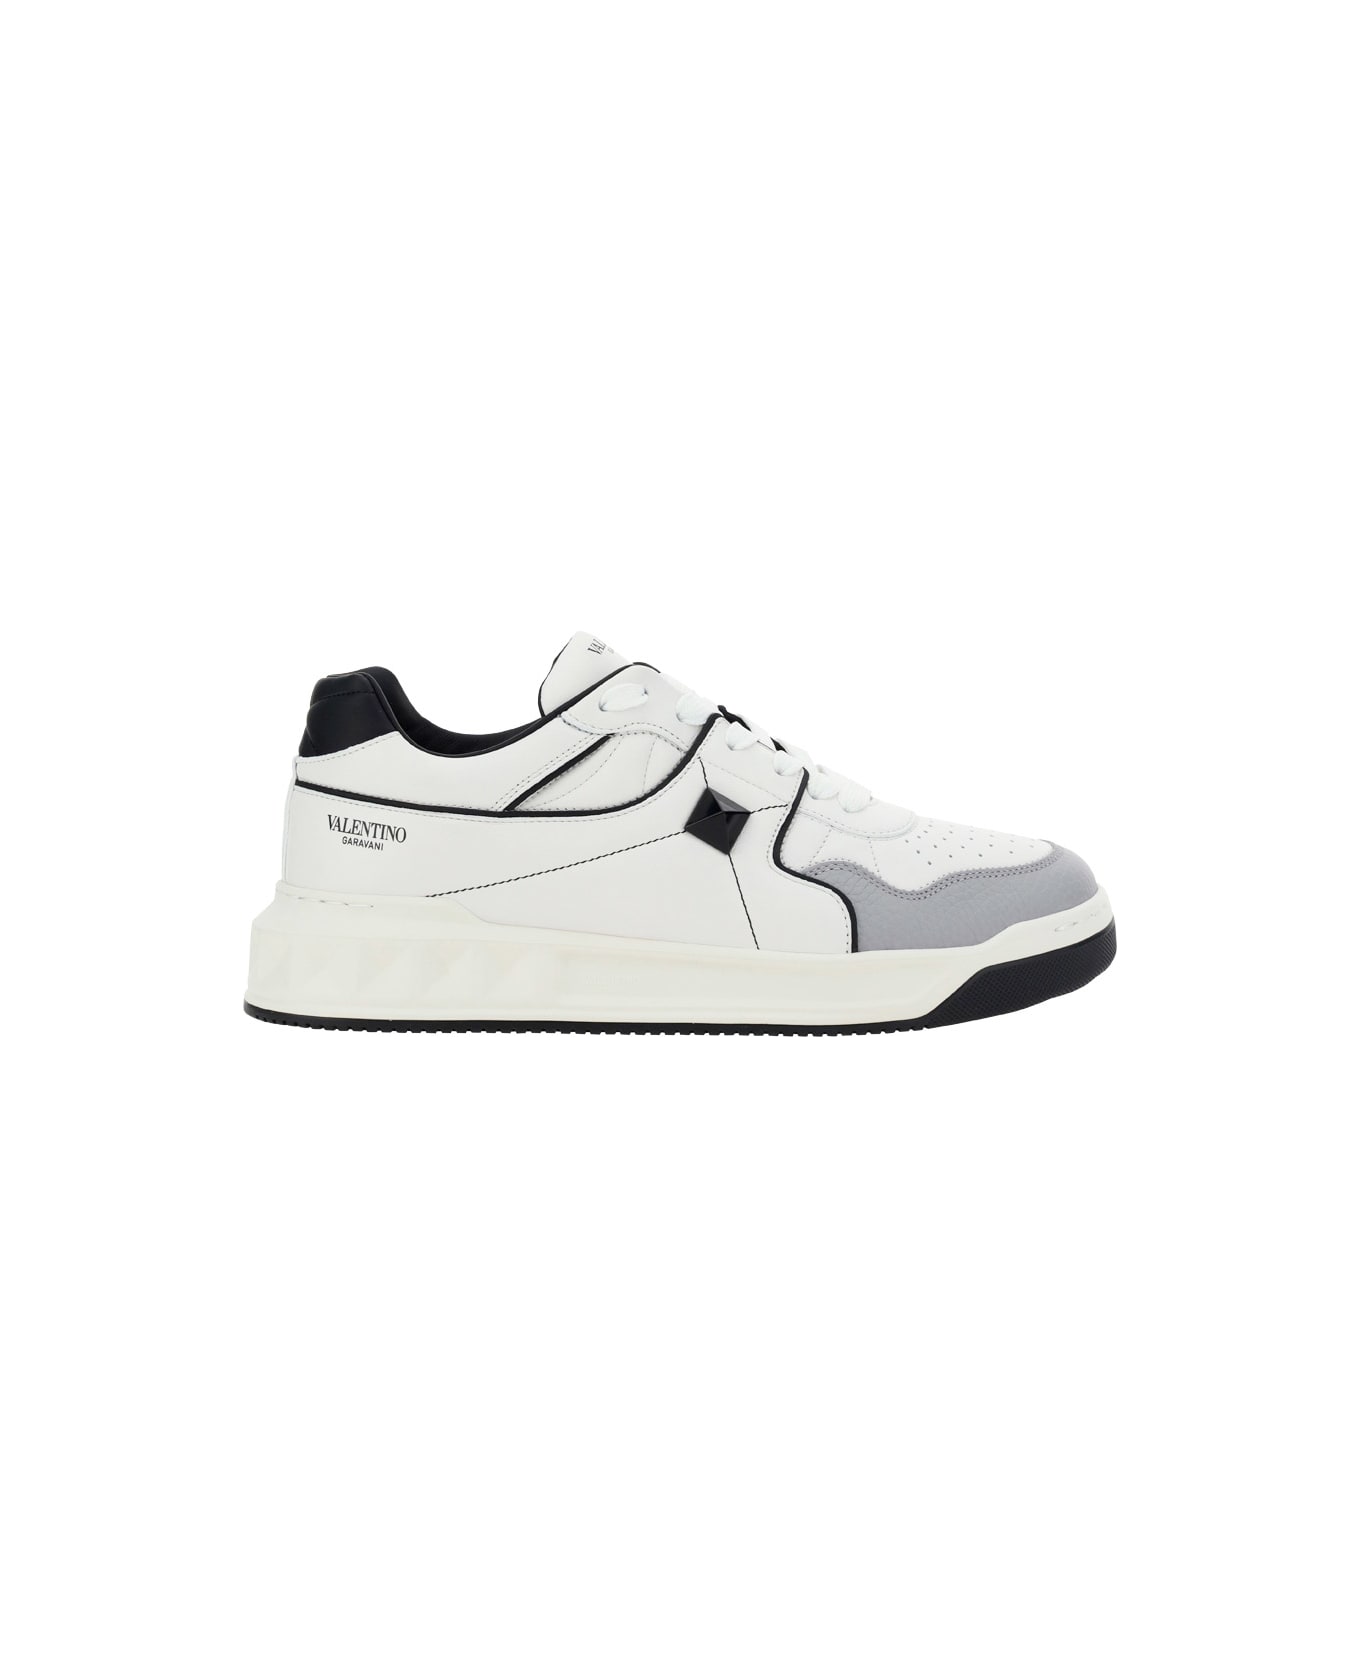 Valentino Garavani One Stud Sneakers - Bianco/nero/pastel Grey